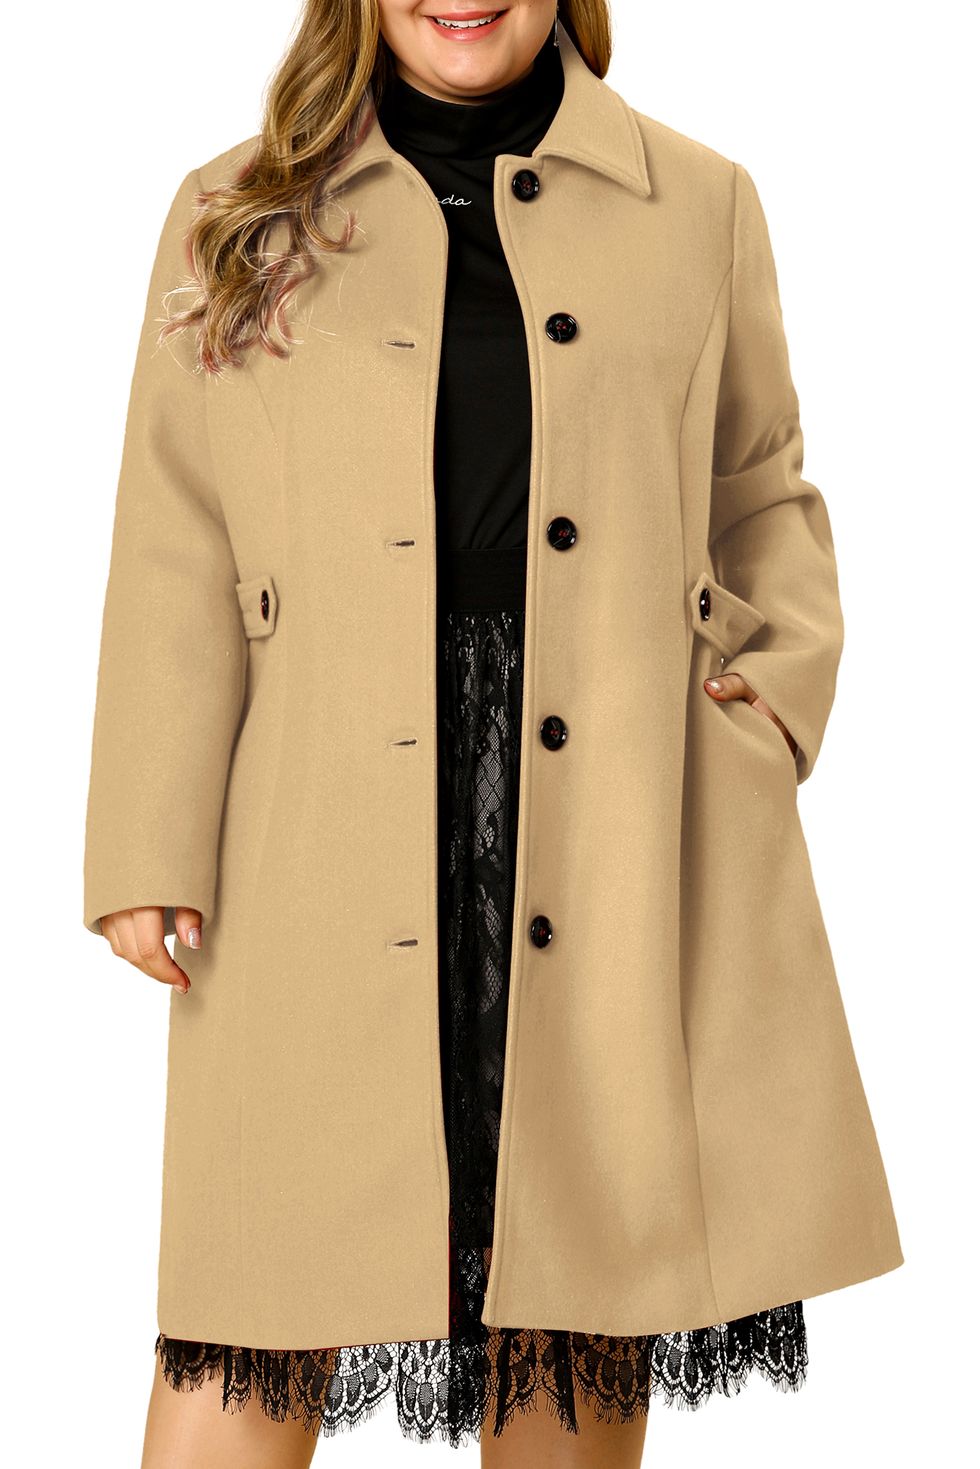 Women Winter Swing Coat Cotton Down Thick Warm A-Line Jacket Princess  Outwear